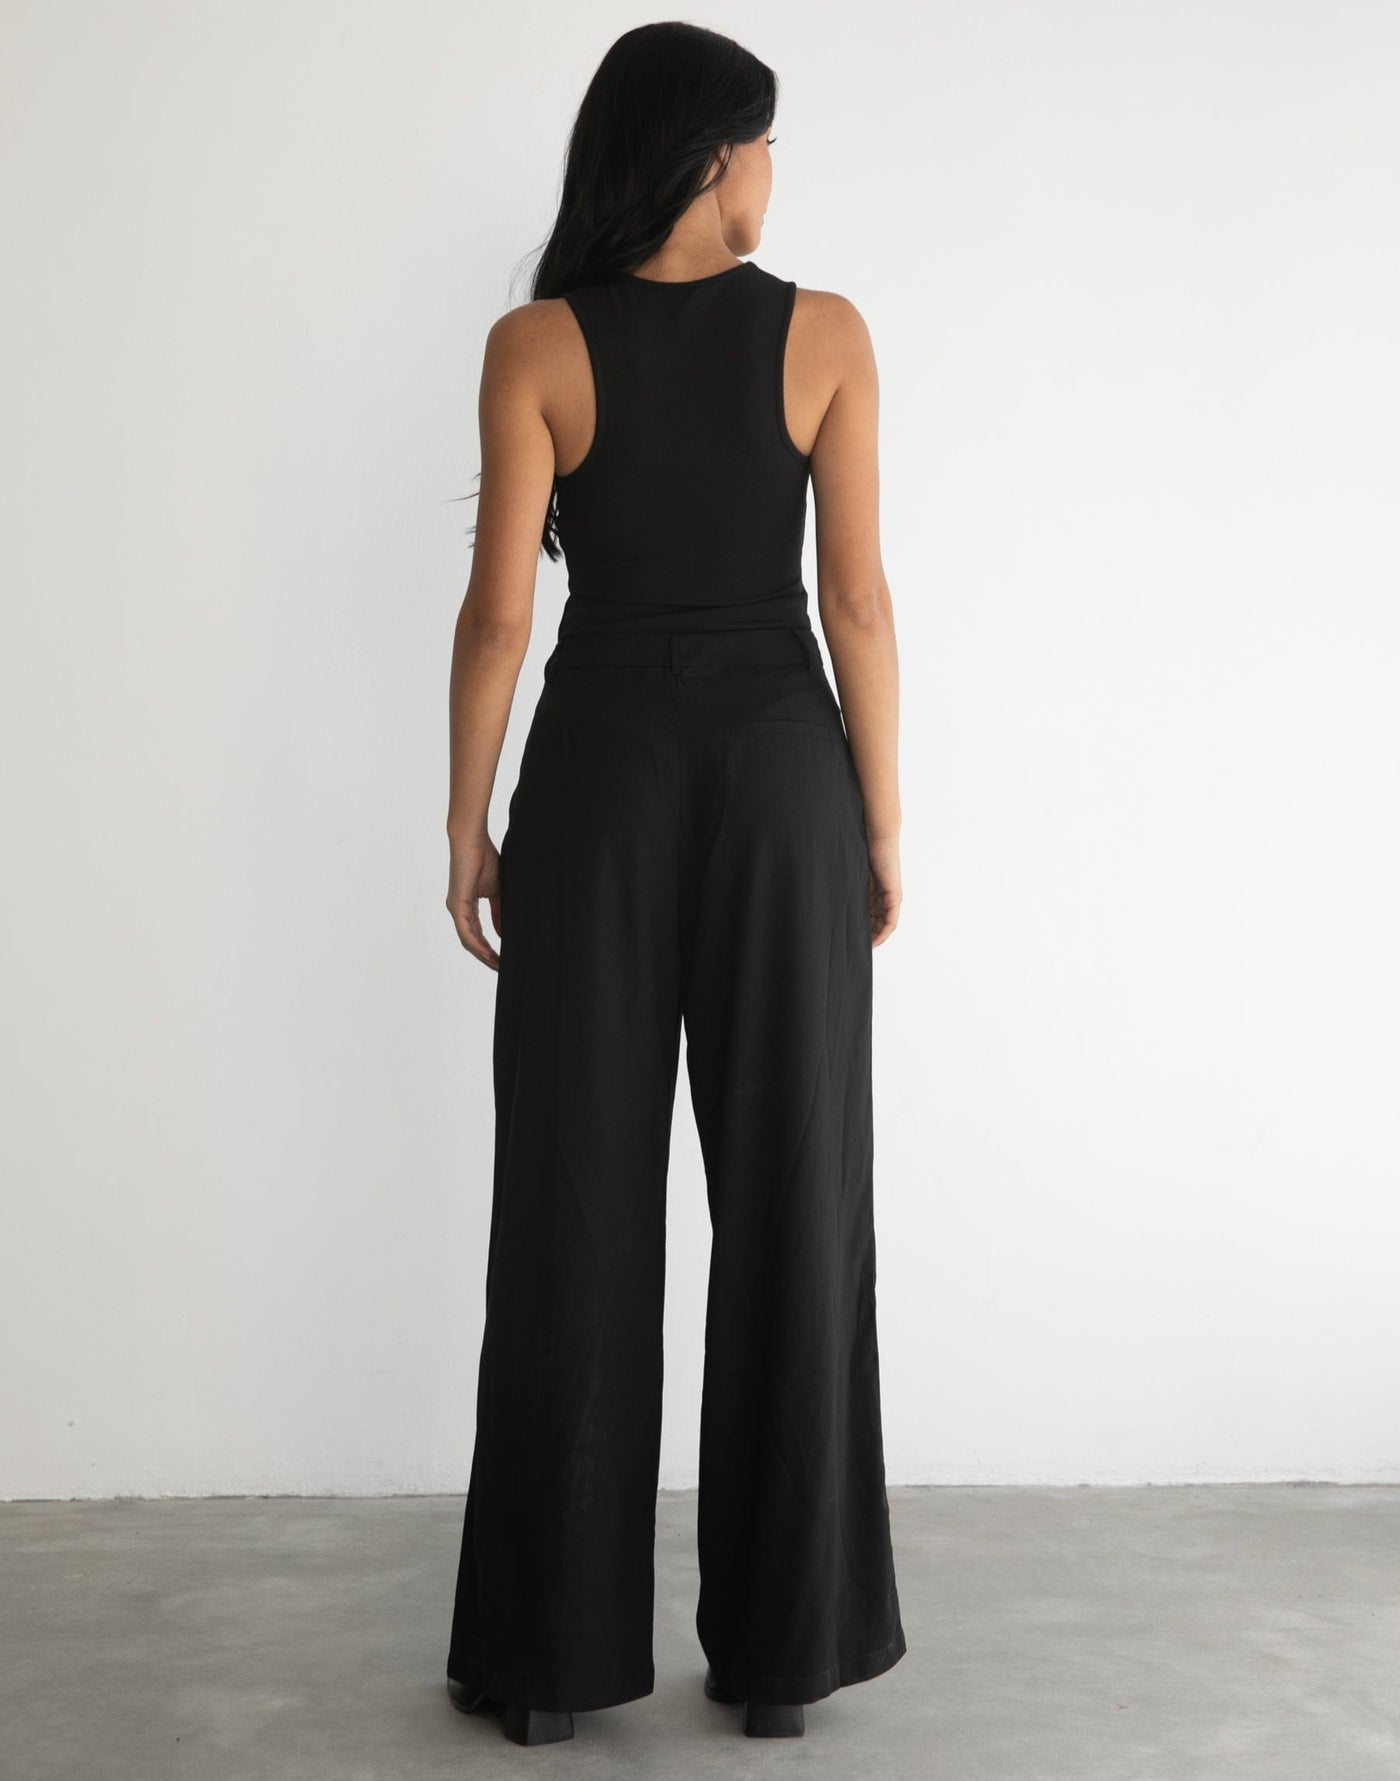 Edith Bodysuit (Black) - Twist Detailed Bodysuit - Women's Top - Charcoal Clothing